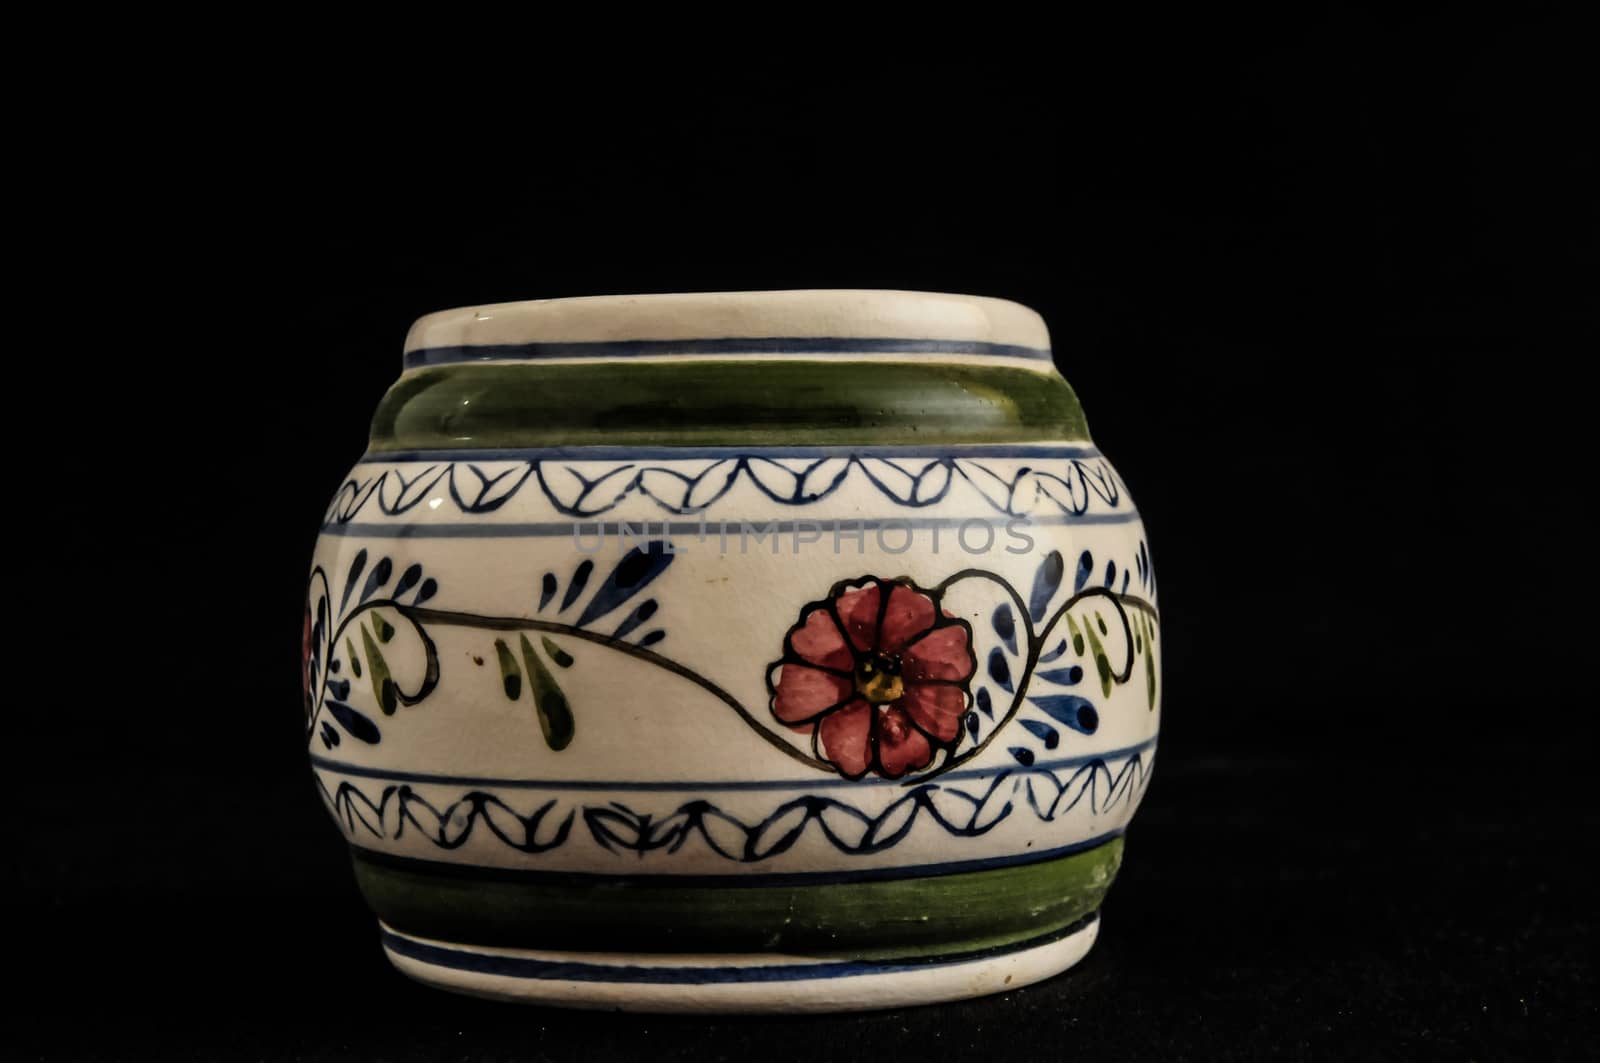 Porcelain vase by underworld